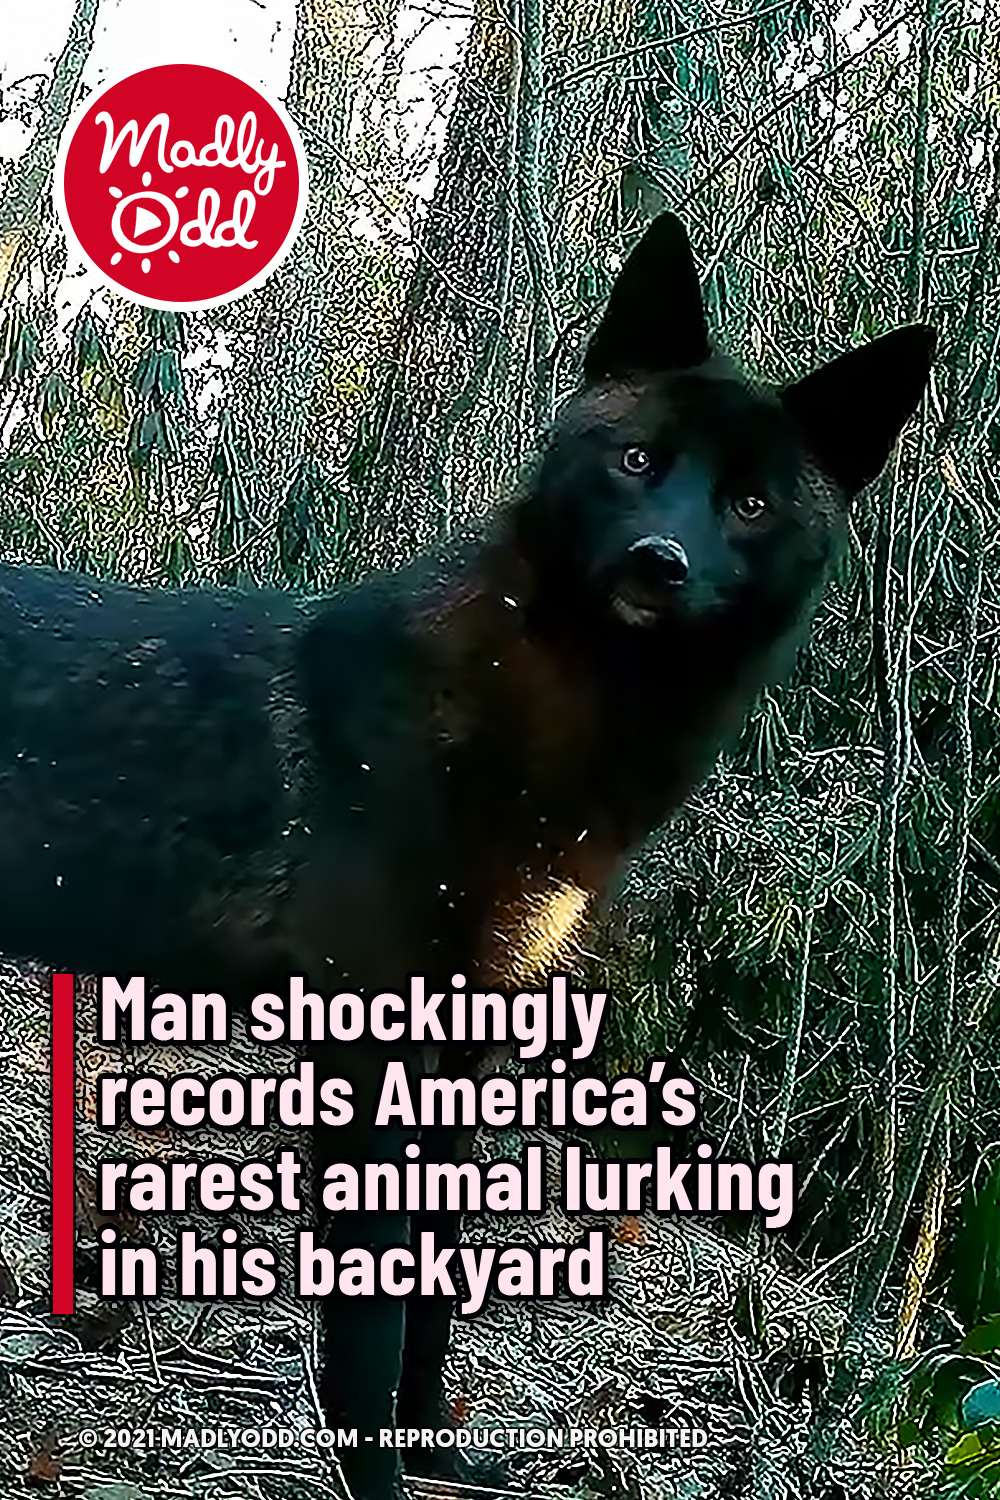 Man records America’s rarest animal lurking in his backyard